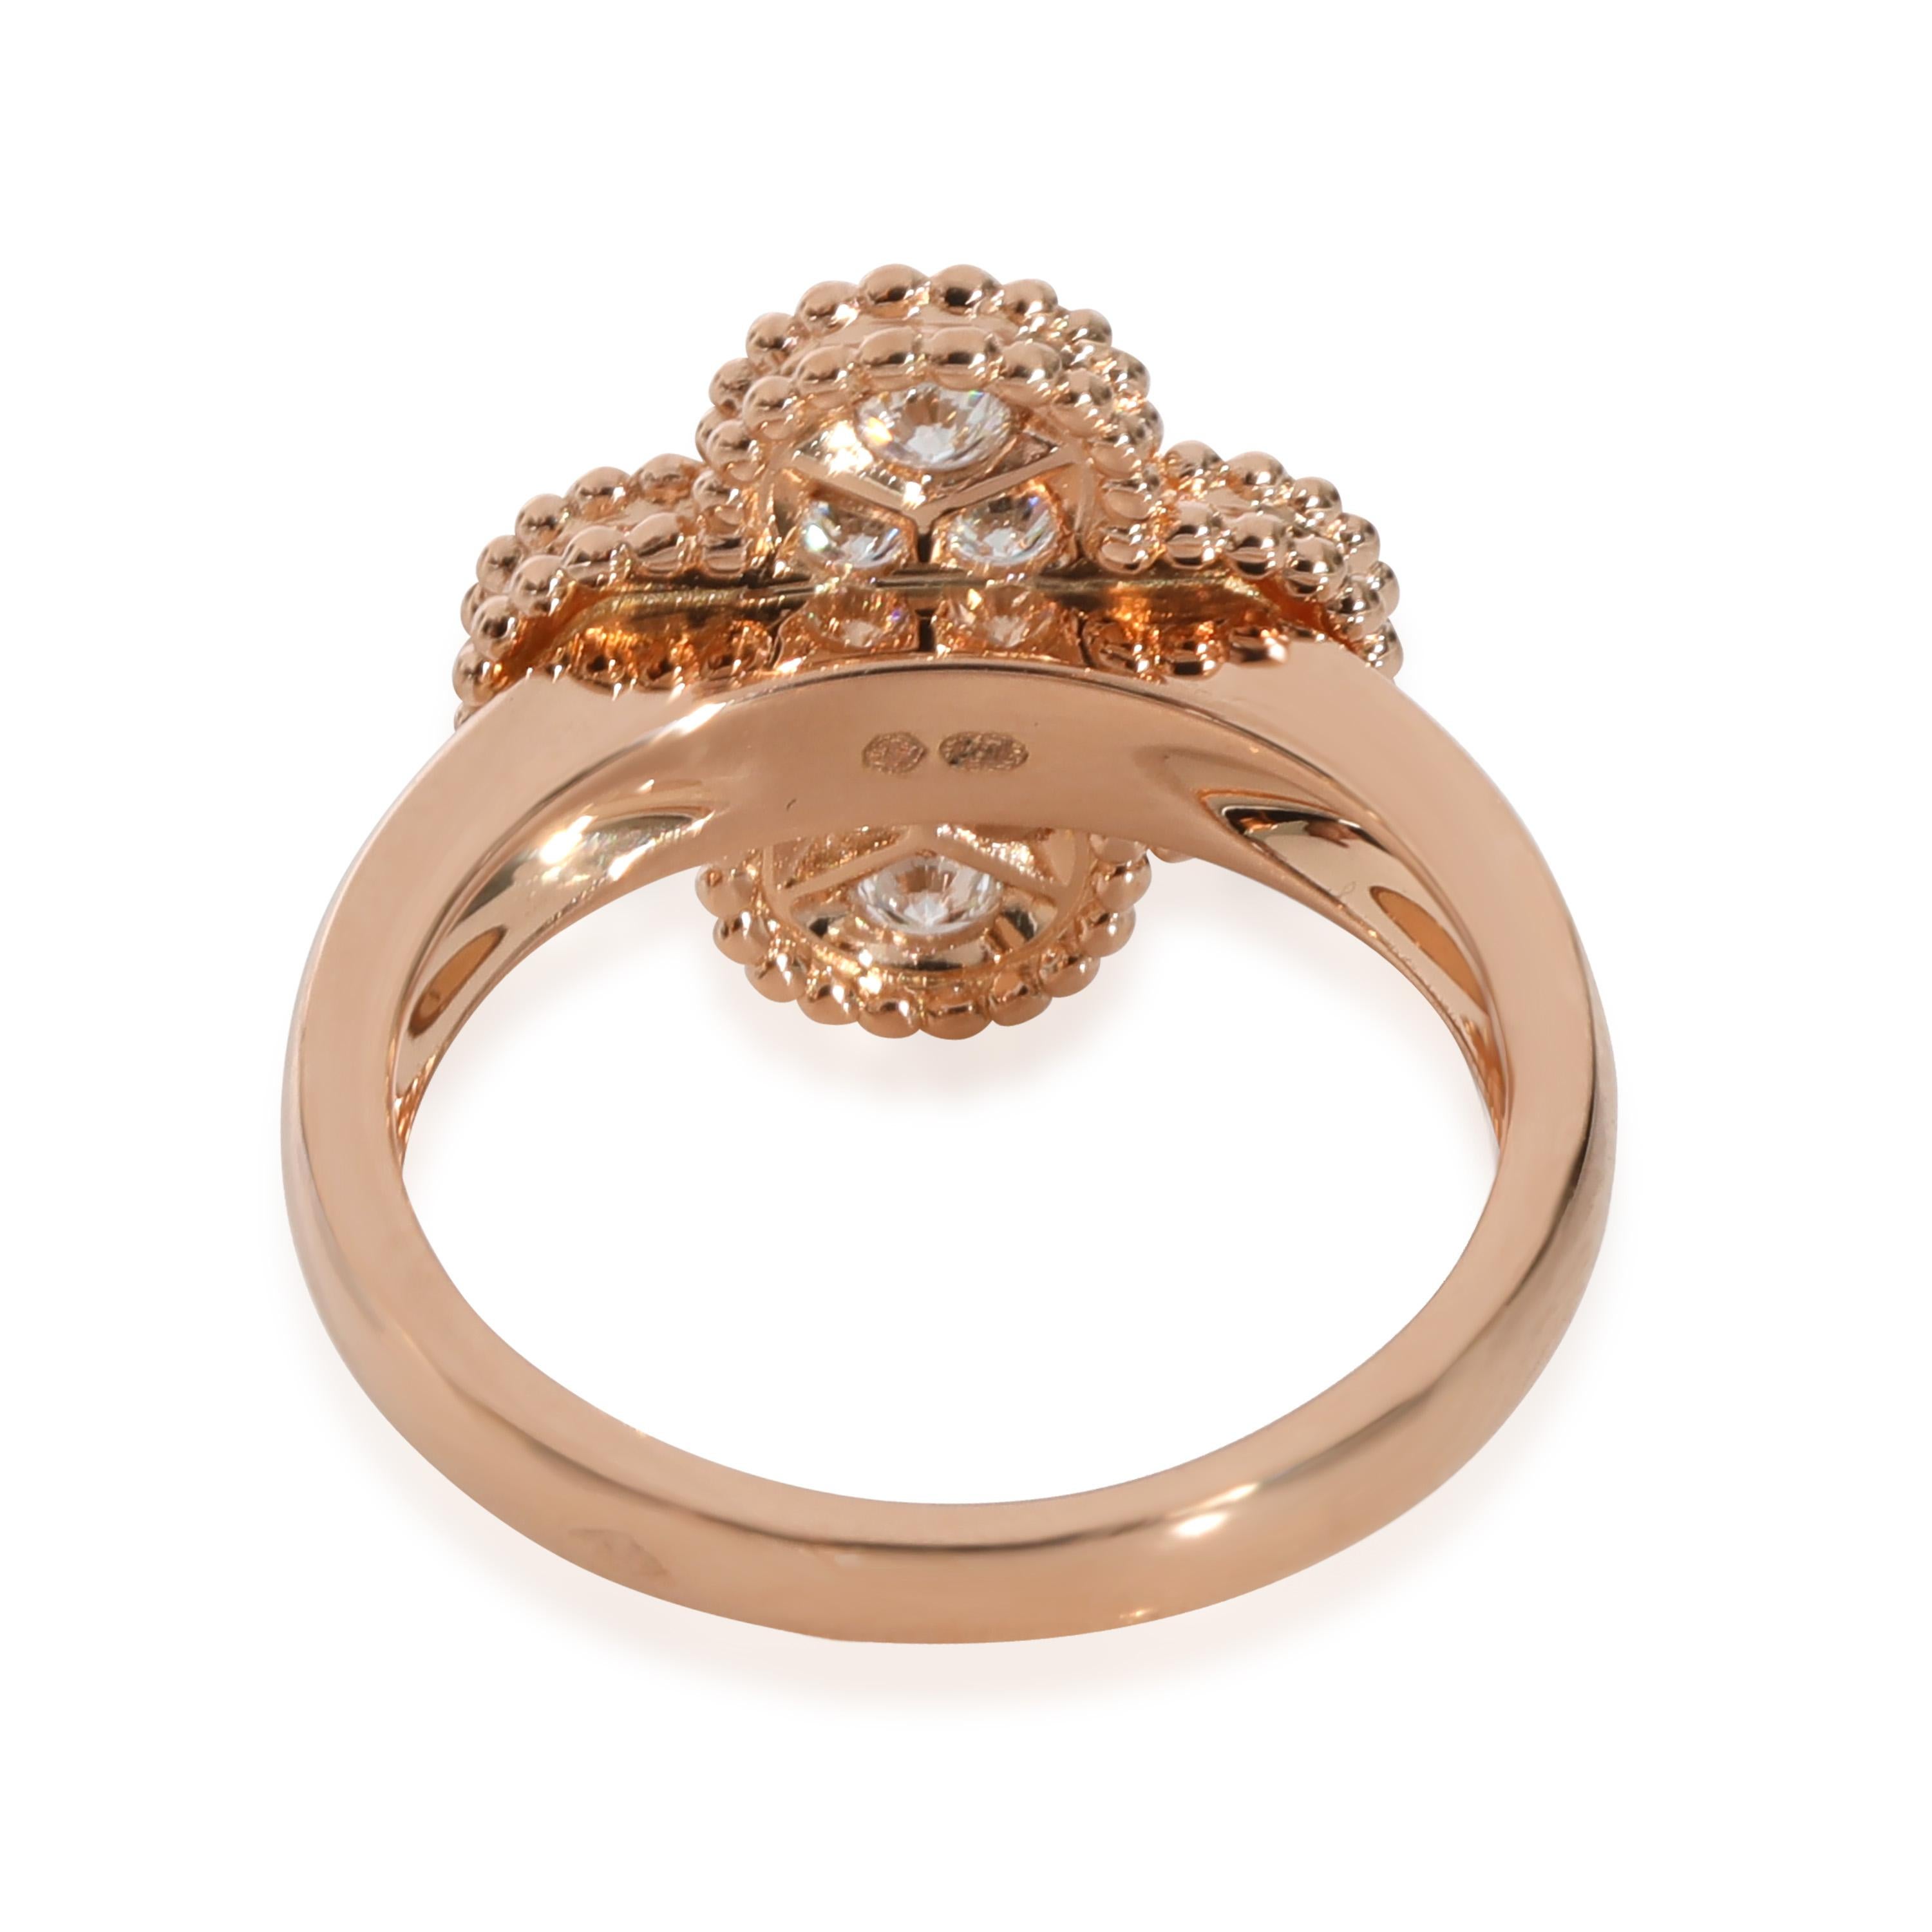 Van Cleef & Arpels Vintage Alhambra Diamond Ring in 18k Rose Gold 0.48 CTW

PRIMARY DETAILS
SKU: 129881
Listing Title: Van Cleef & Arpels Vintage Alhambra Diamond Ring in 18k Rose Gold 0.48 CTW
Condition Description: Launched in 1968, the Alhambra